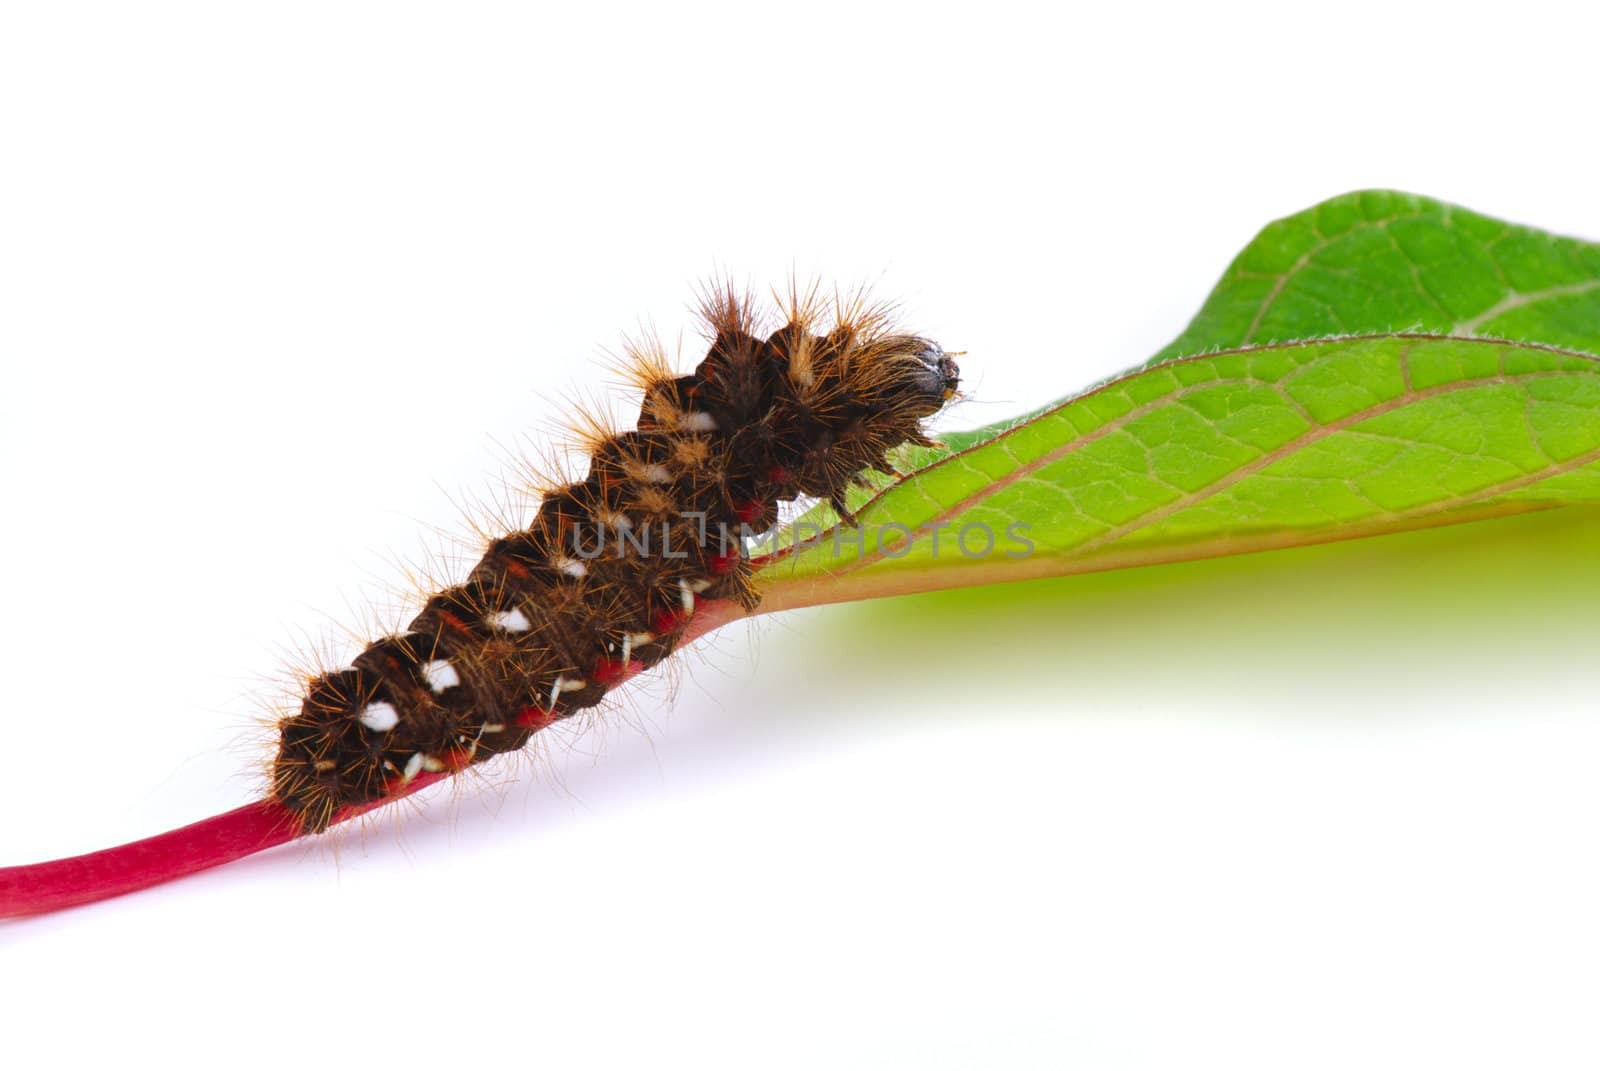 Caterpillar on leaf by Kamensky